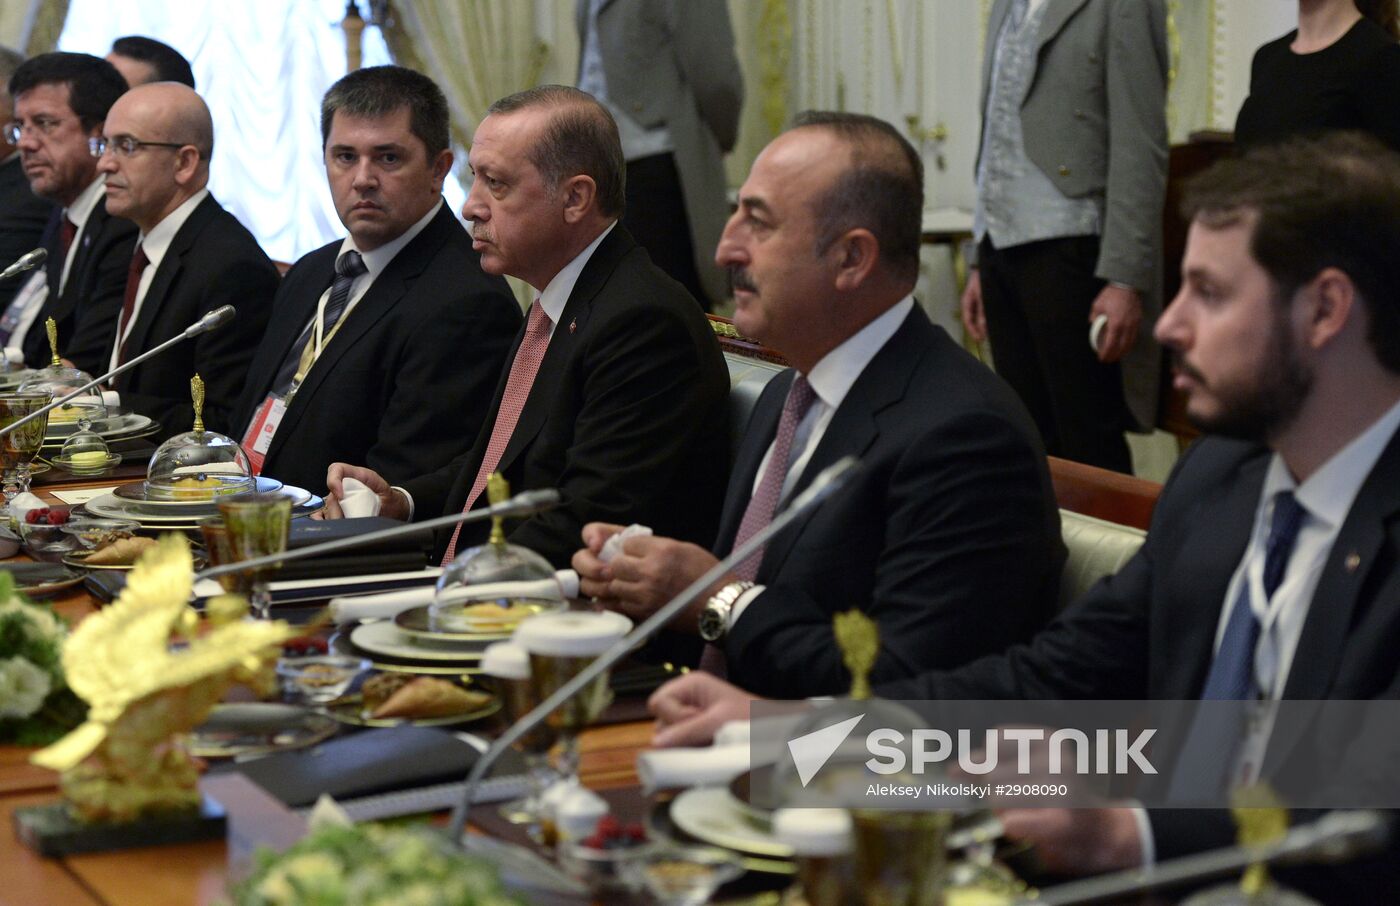 Russian President Vladimir Putin meets with Turkish President Recep Tayyip Erdogan in St. Petersburg